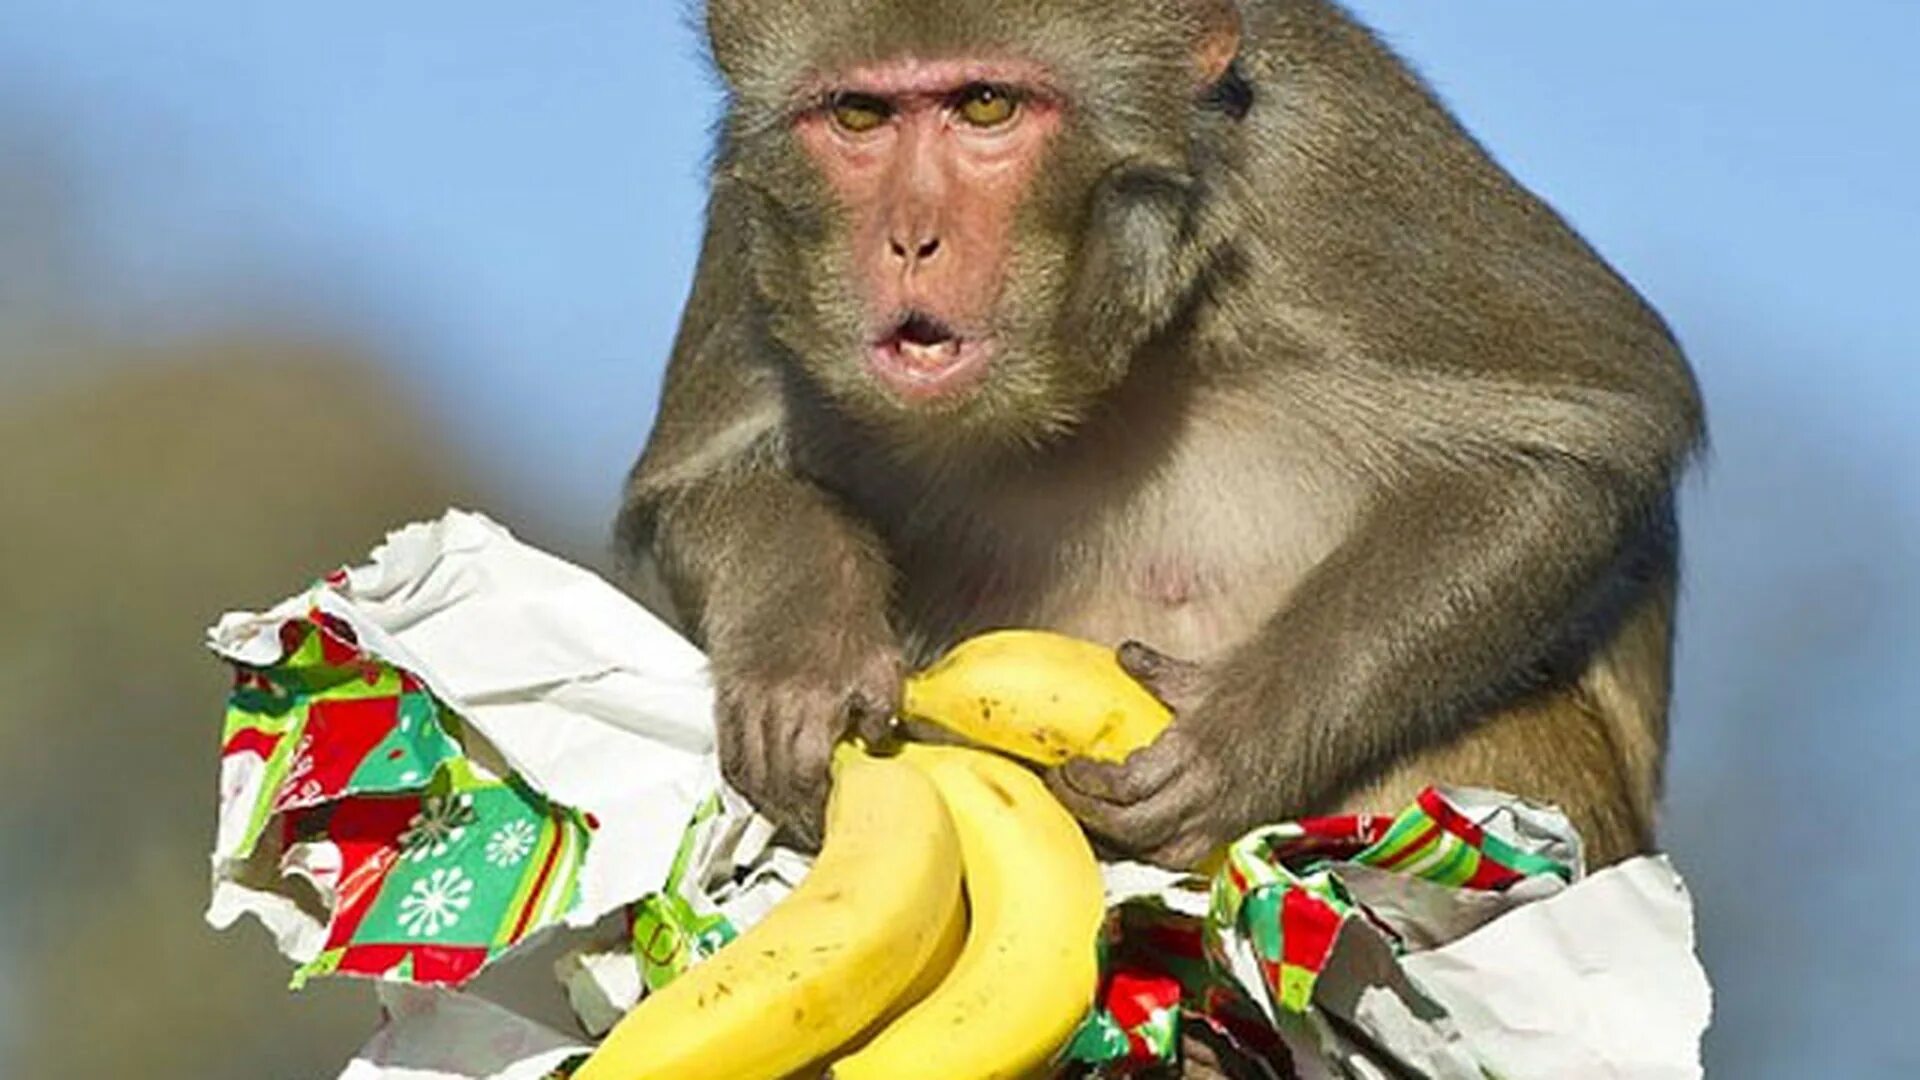 Обезьяна с бананом. Обезьяна ест банан. J,tpmzys c ,fyfyyfvb. Макаки с бананами. Про обезьян и бананы